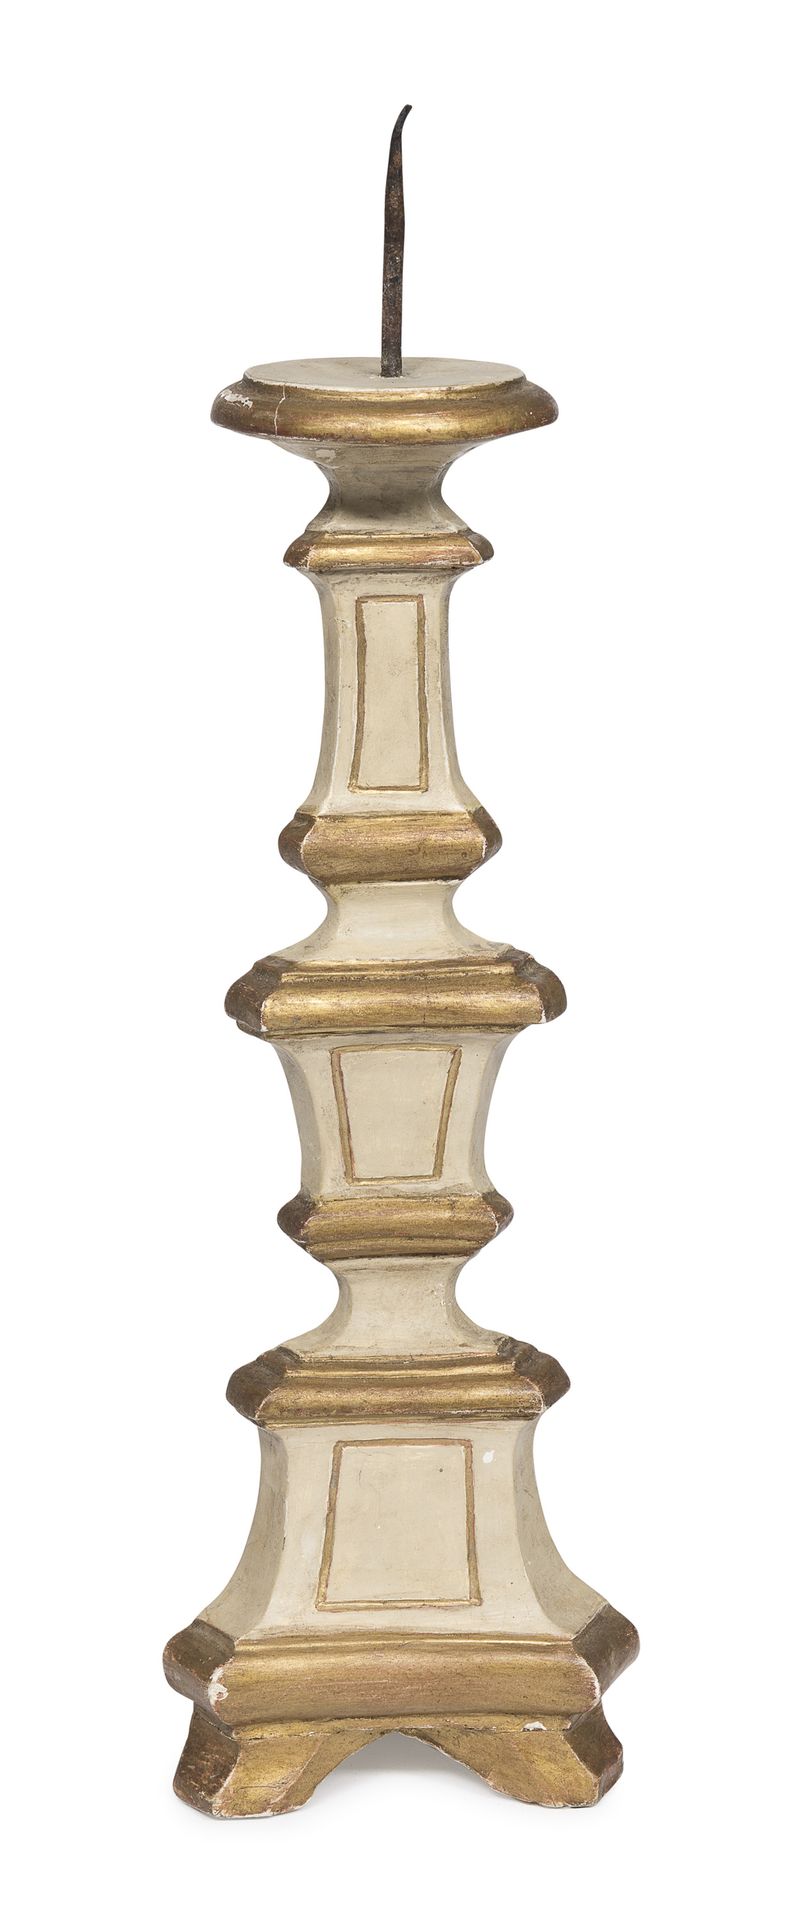 Null 米尼翁烛台，18世纪

白色和金色漆面，三角形截面。

尺寸为30 x 11厘米。